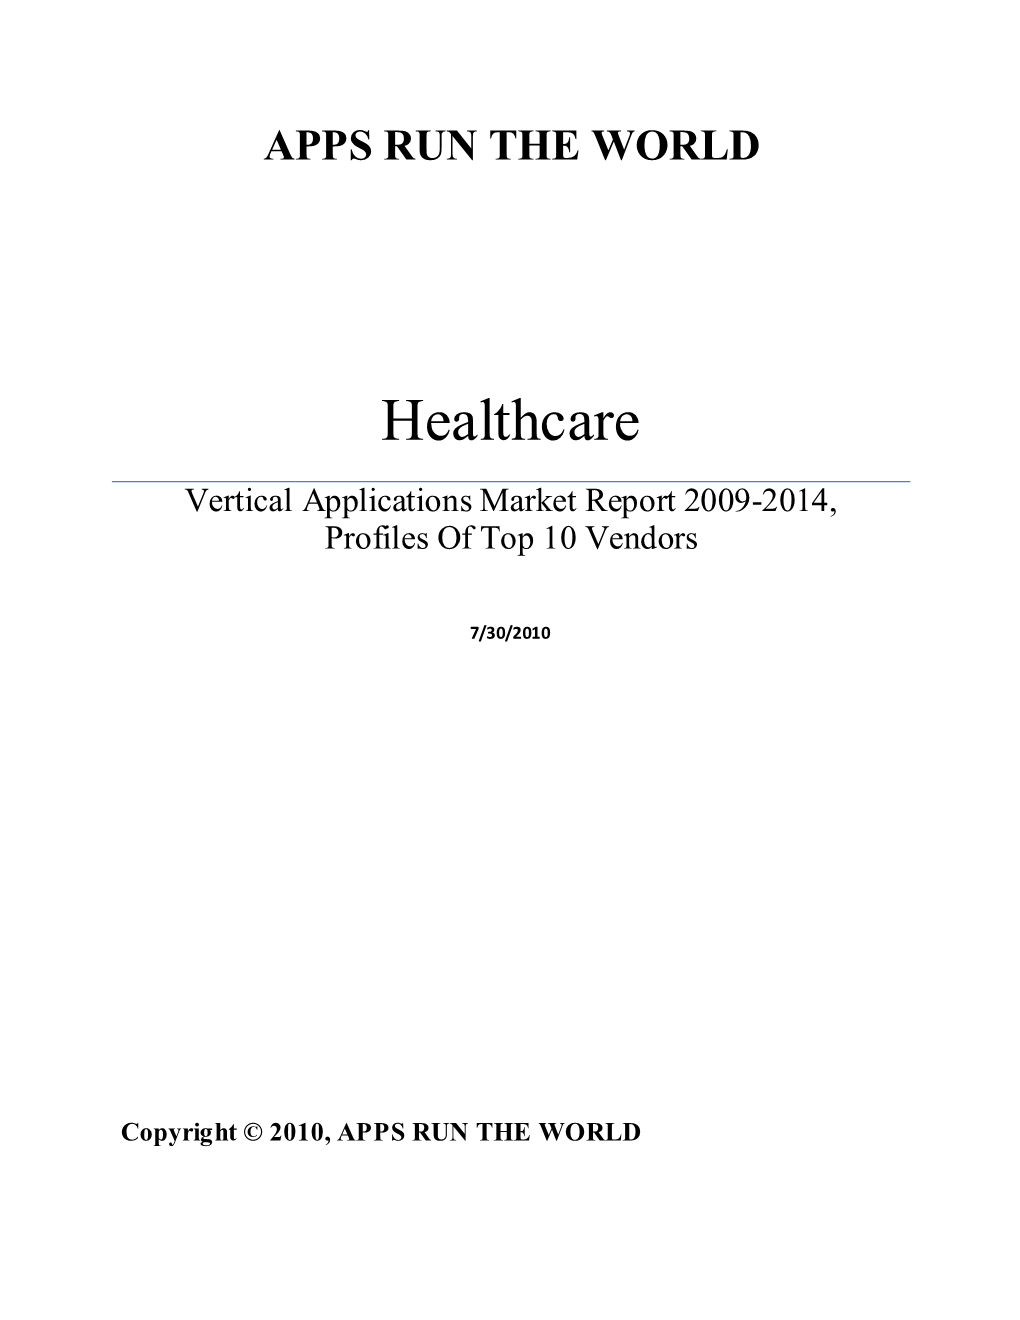 Healthcare Vertical Applications Market Report 2009-2014, Profiles of Top 10 Vendors